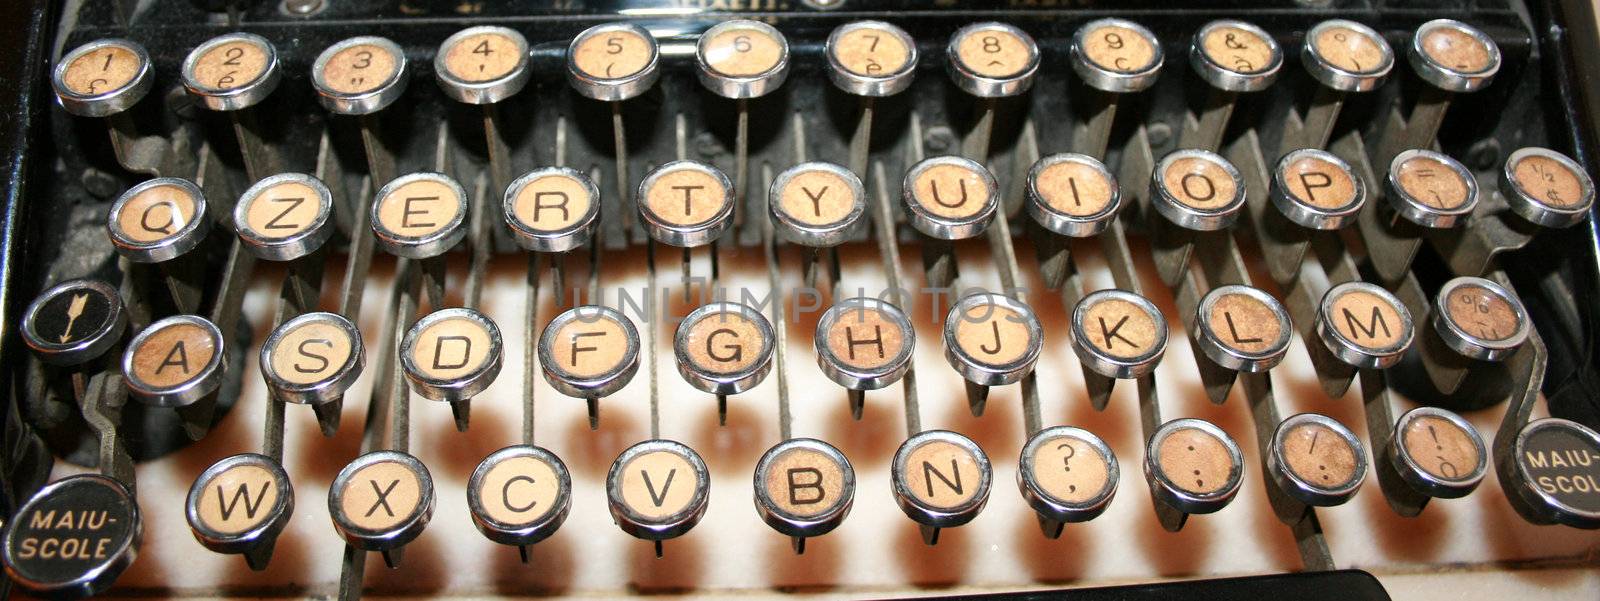 old typewriter keys by keki